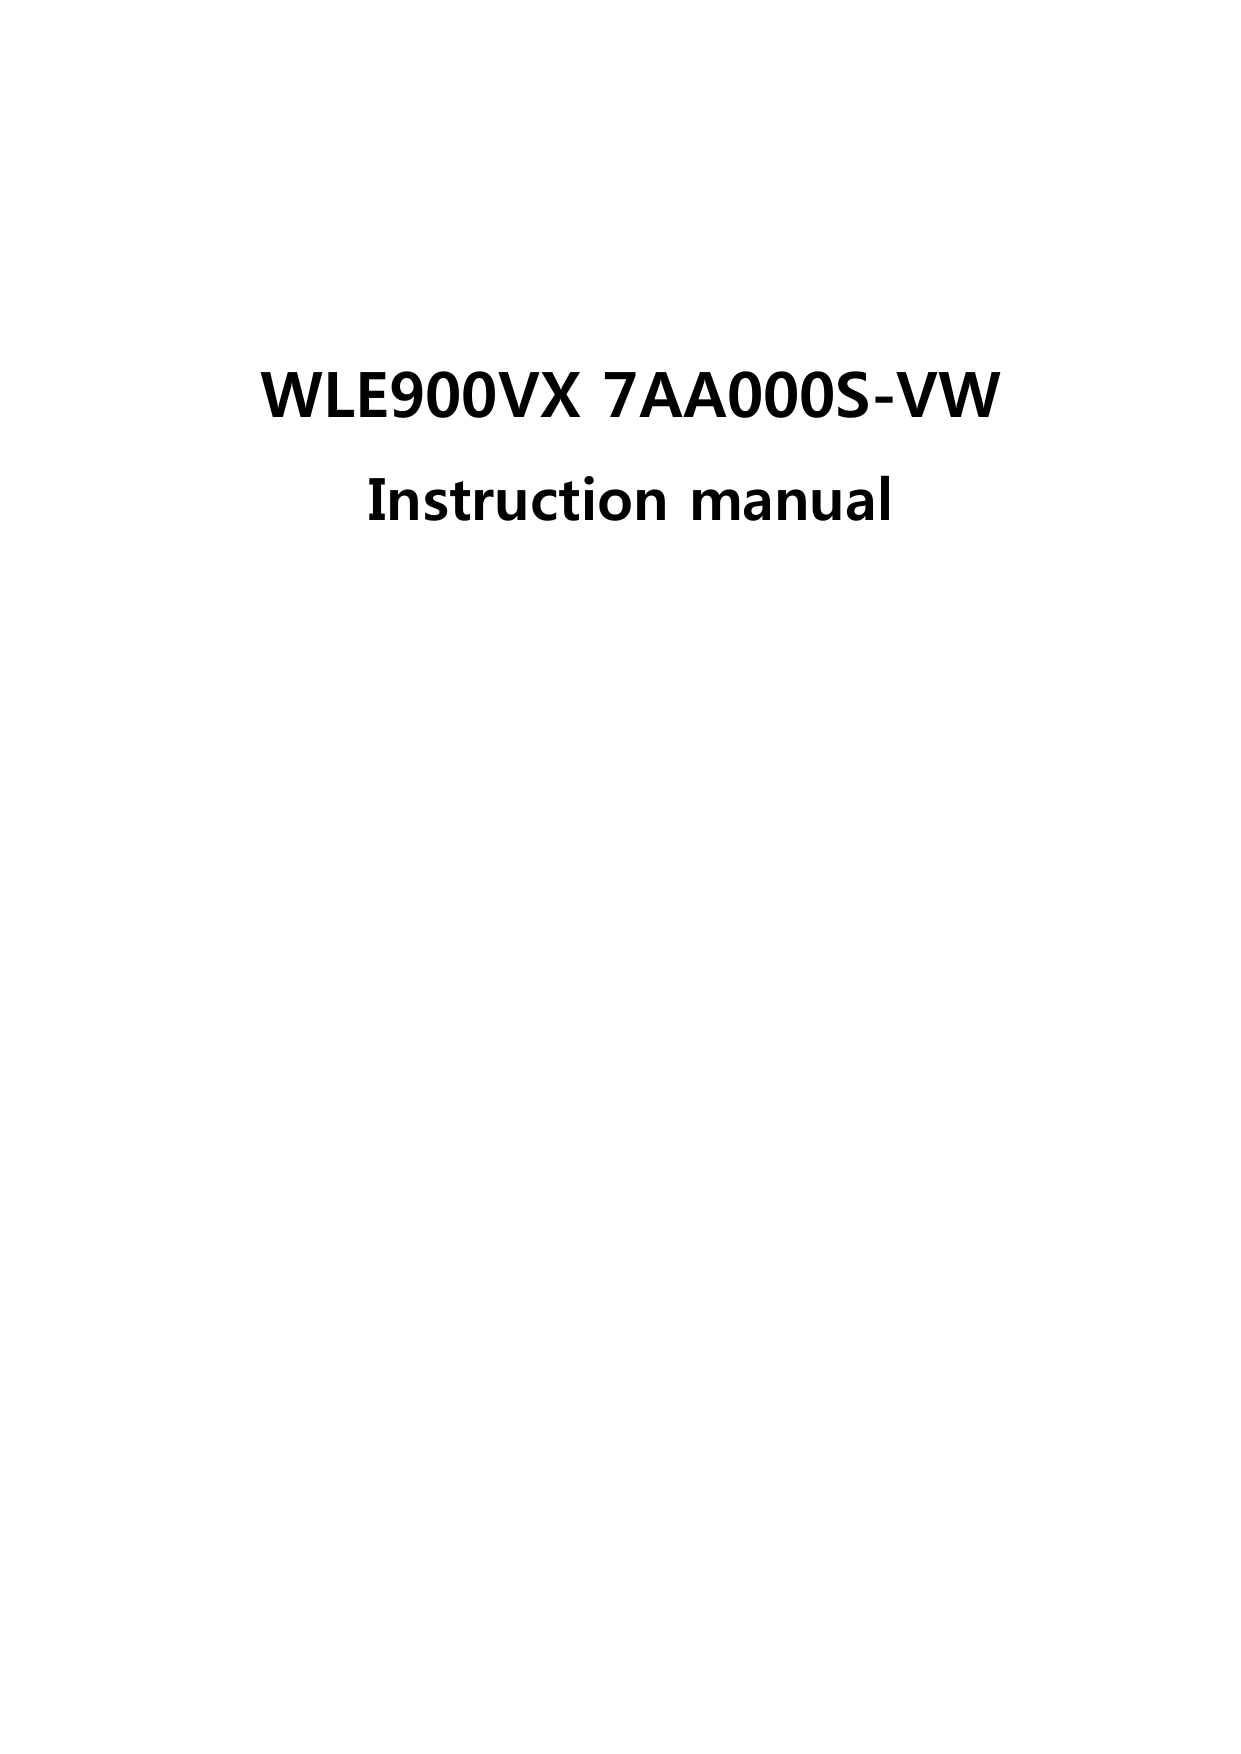                                                    WLE900VX 7AA000S-VW Instruction manual  